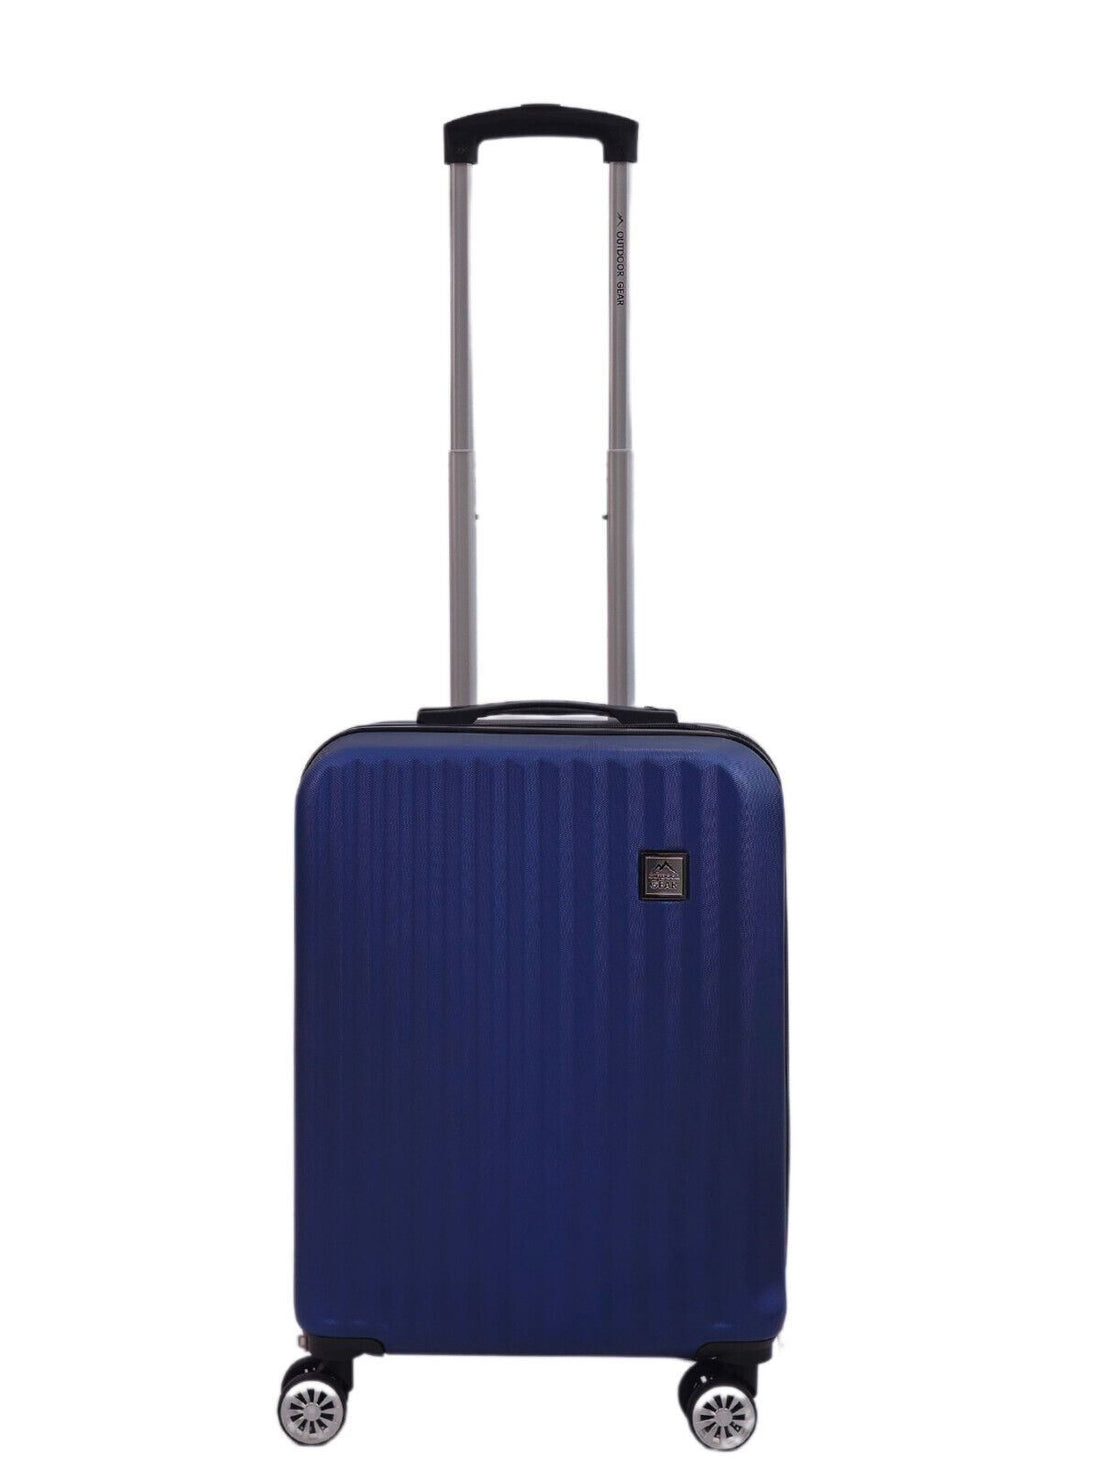 Albertville Cabin Hard Shell Suitcase in Blue